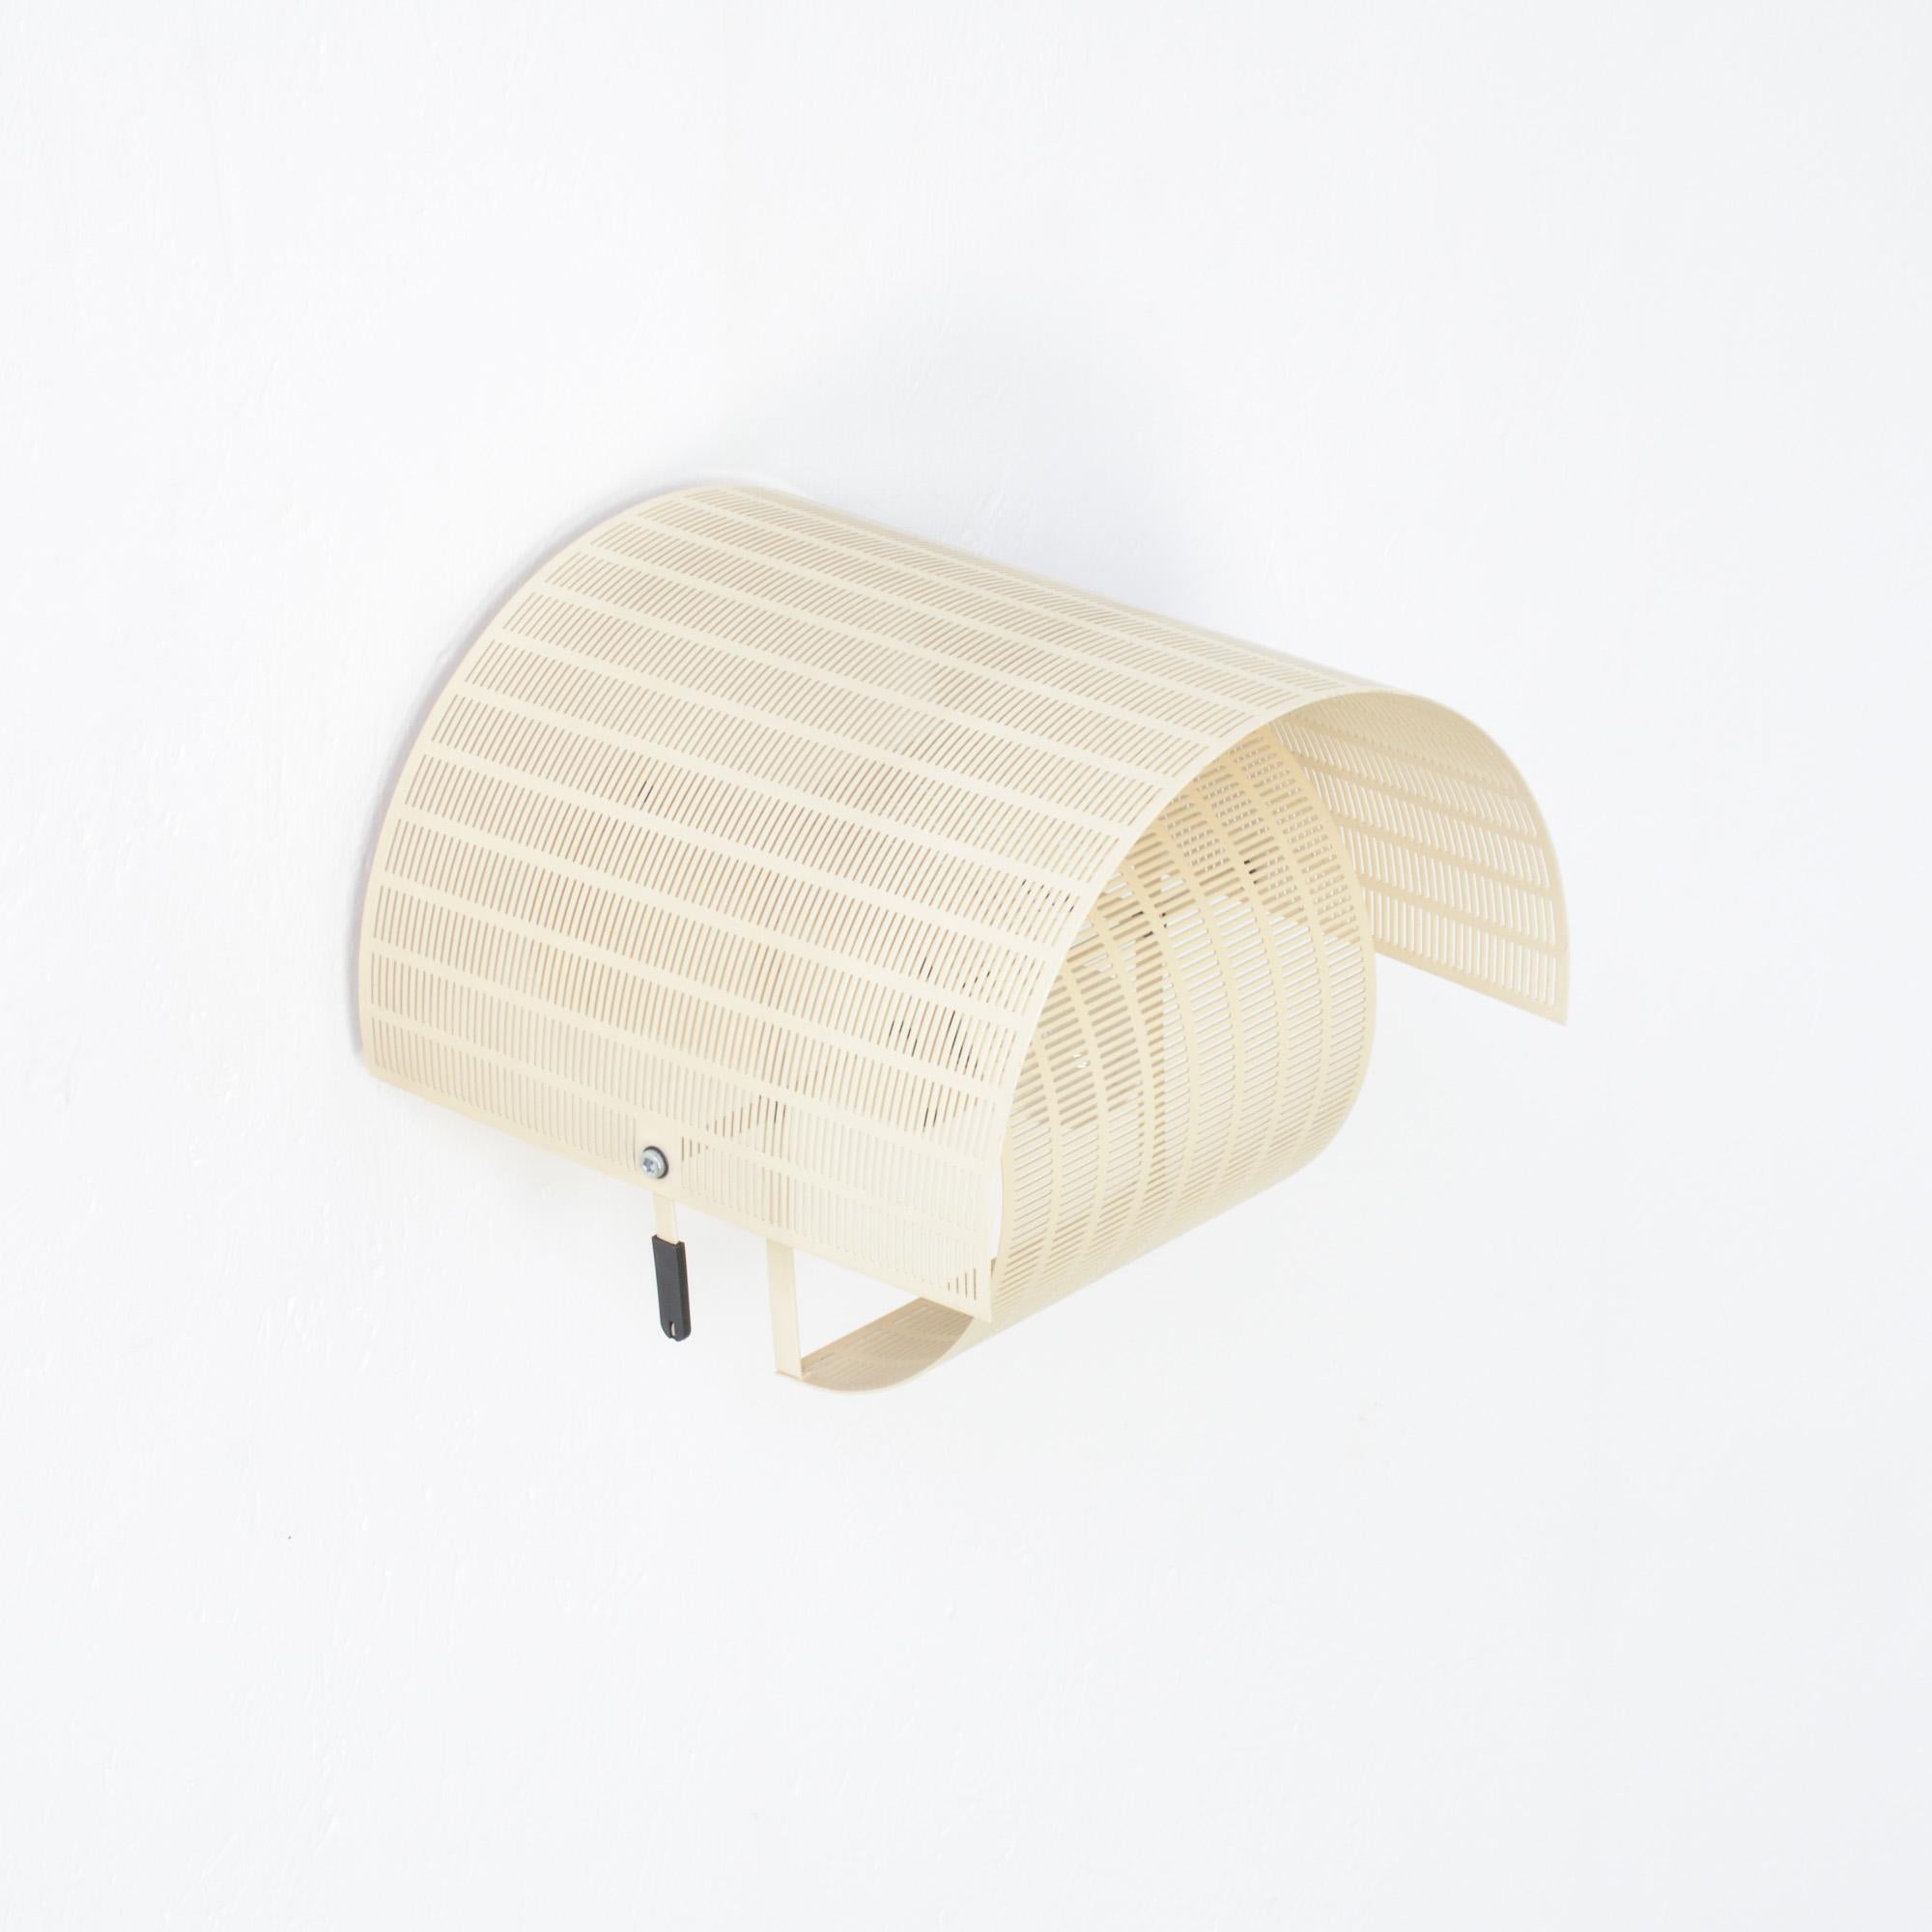 Italian Shogun Wall Lamp by Mario Botta